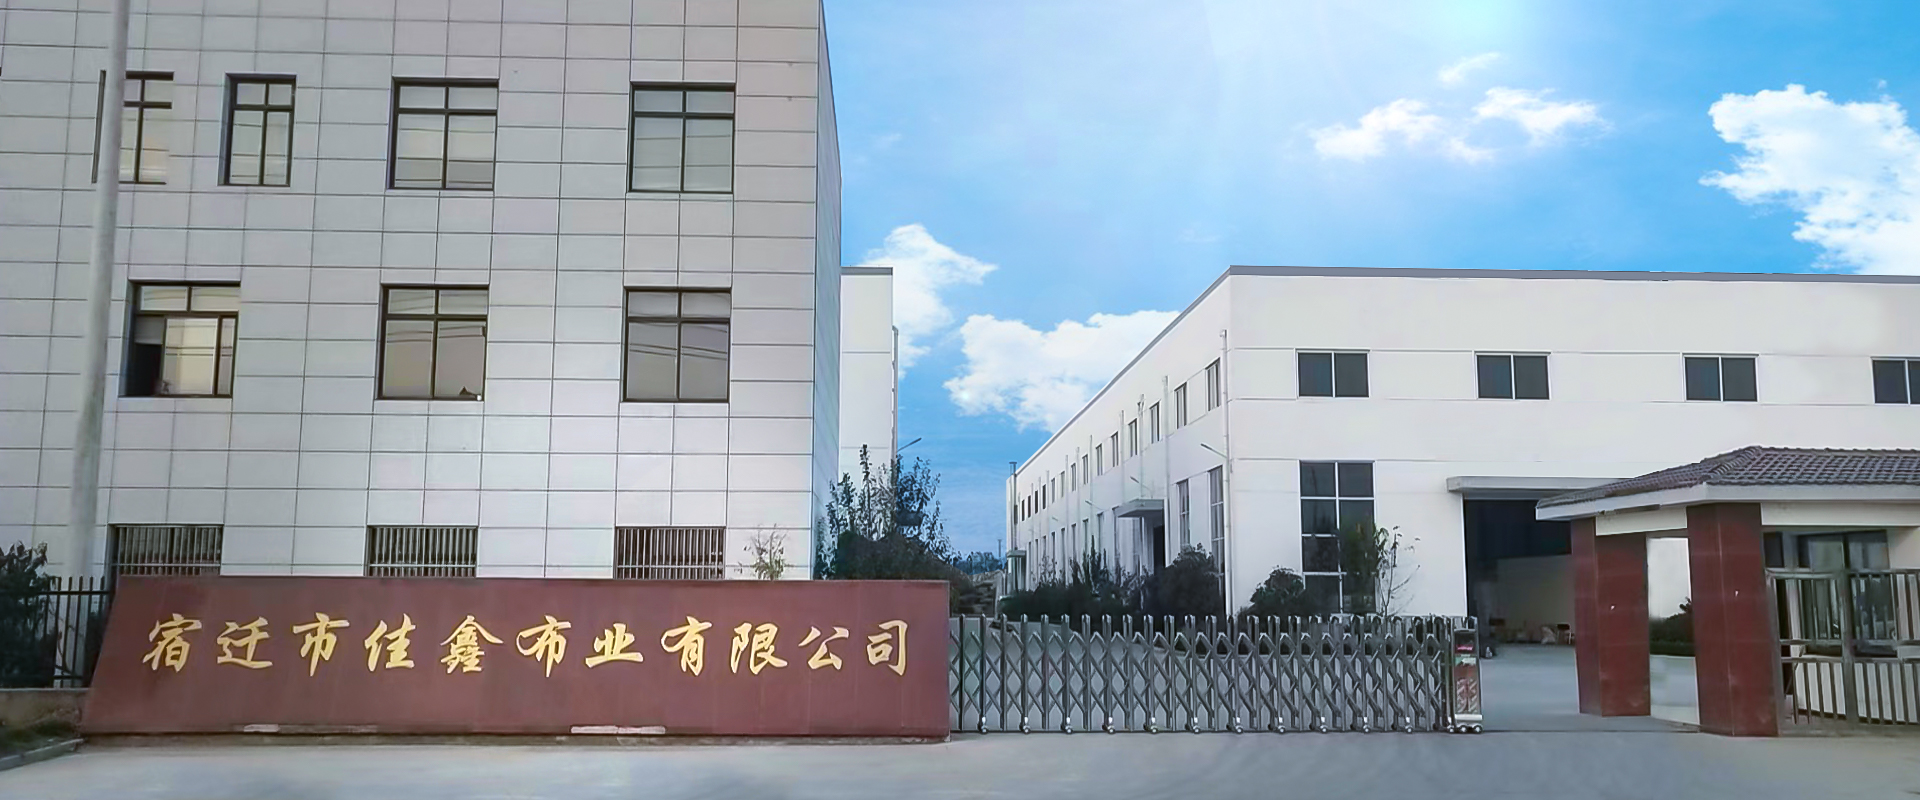 Suzhou Starocean's company